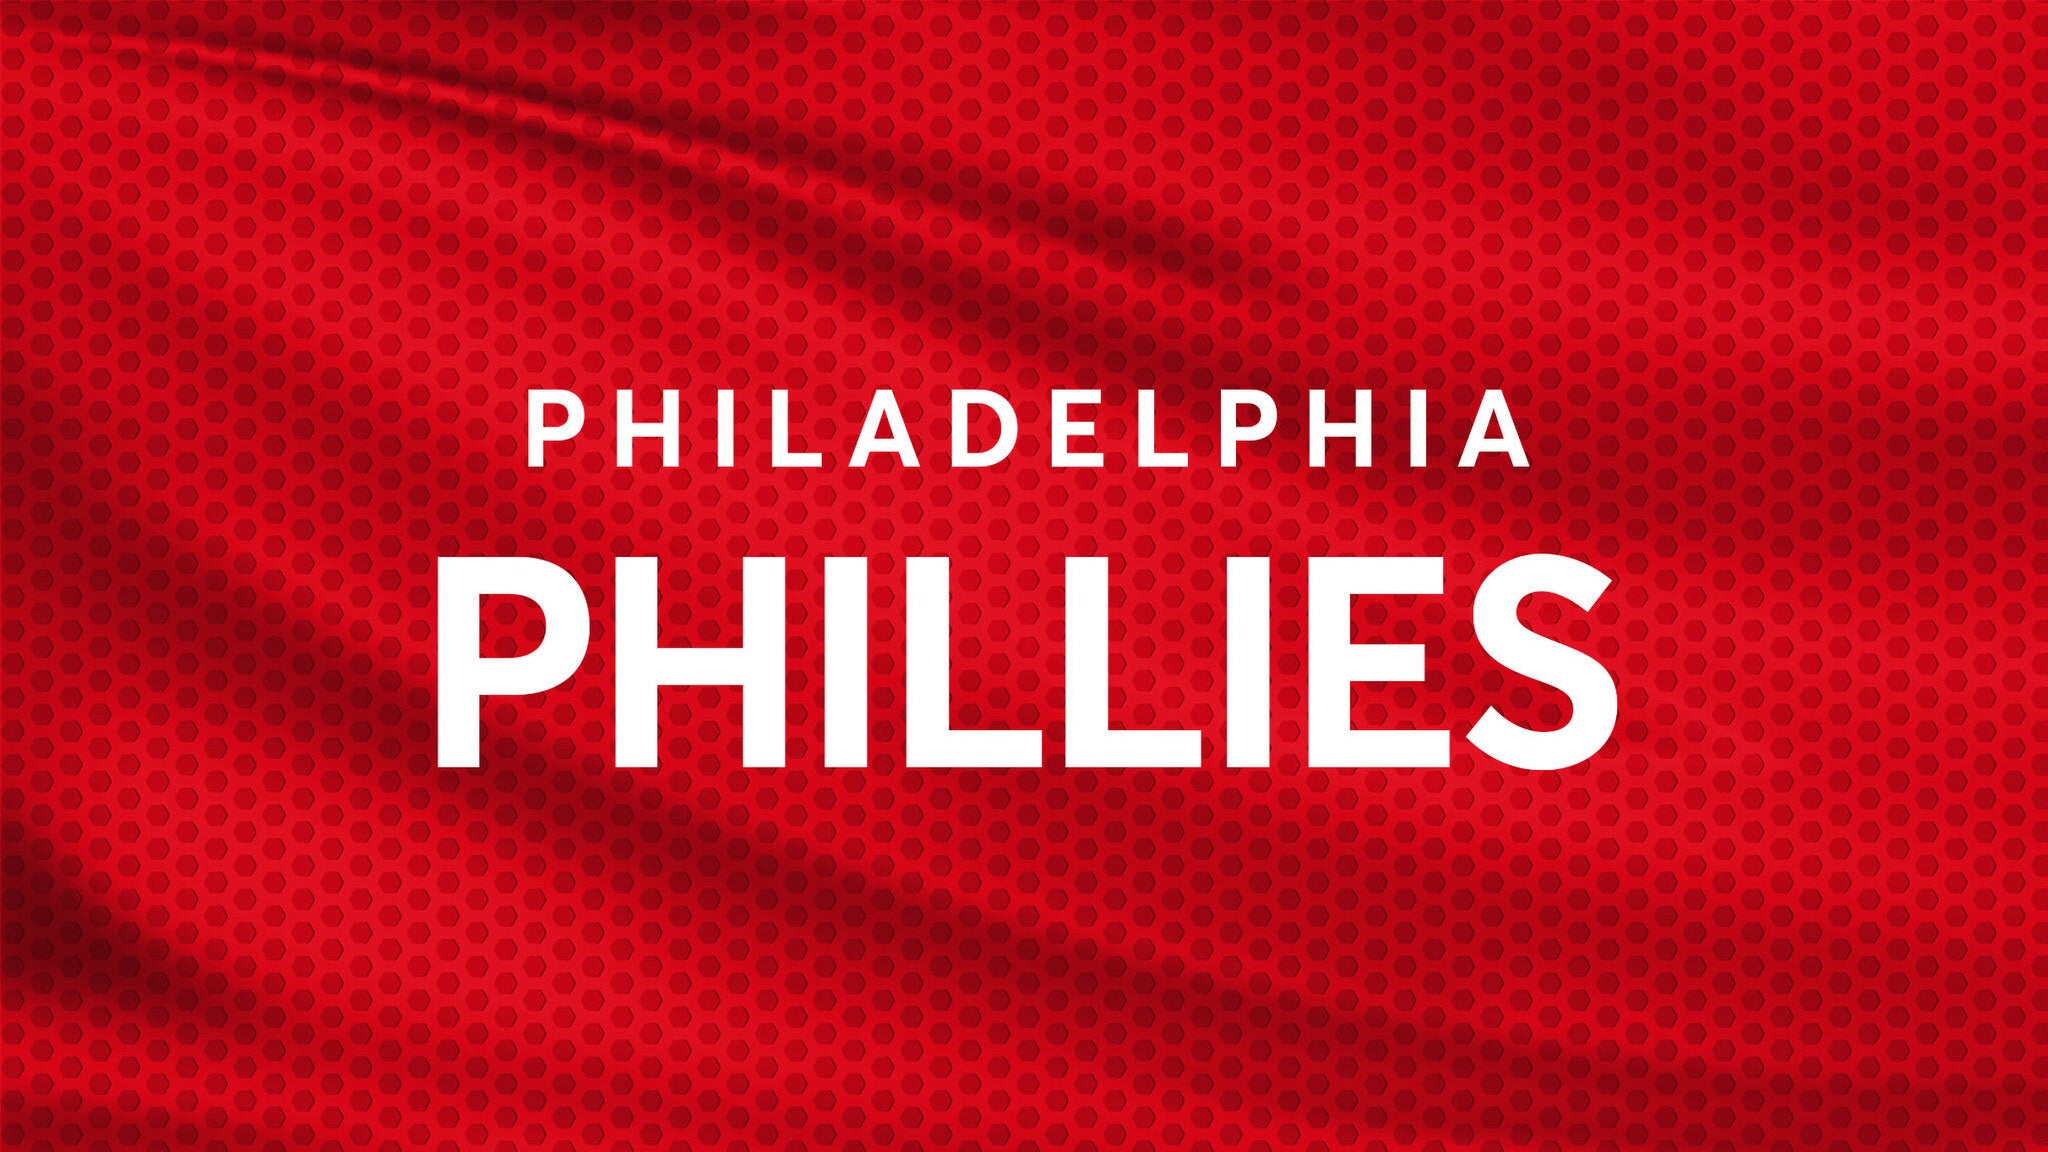 Philadelphia Phillies vs. Atlanta Braves